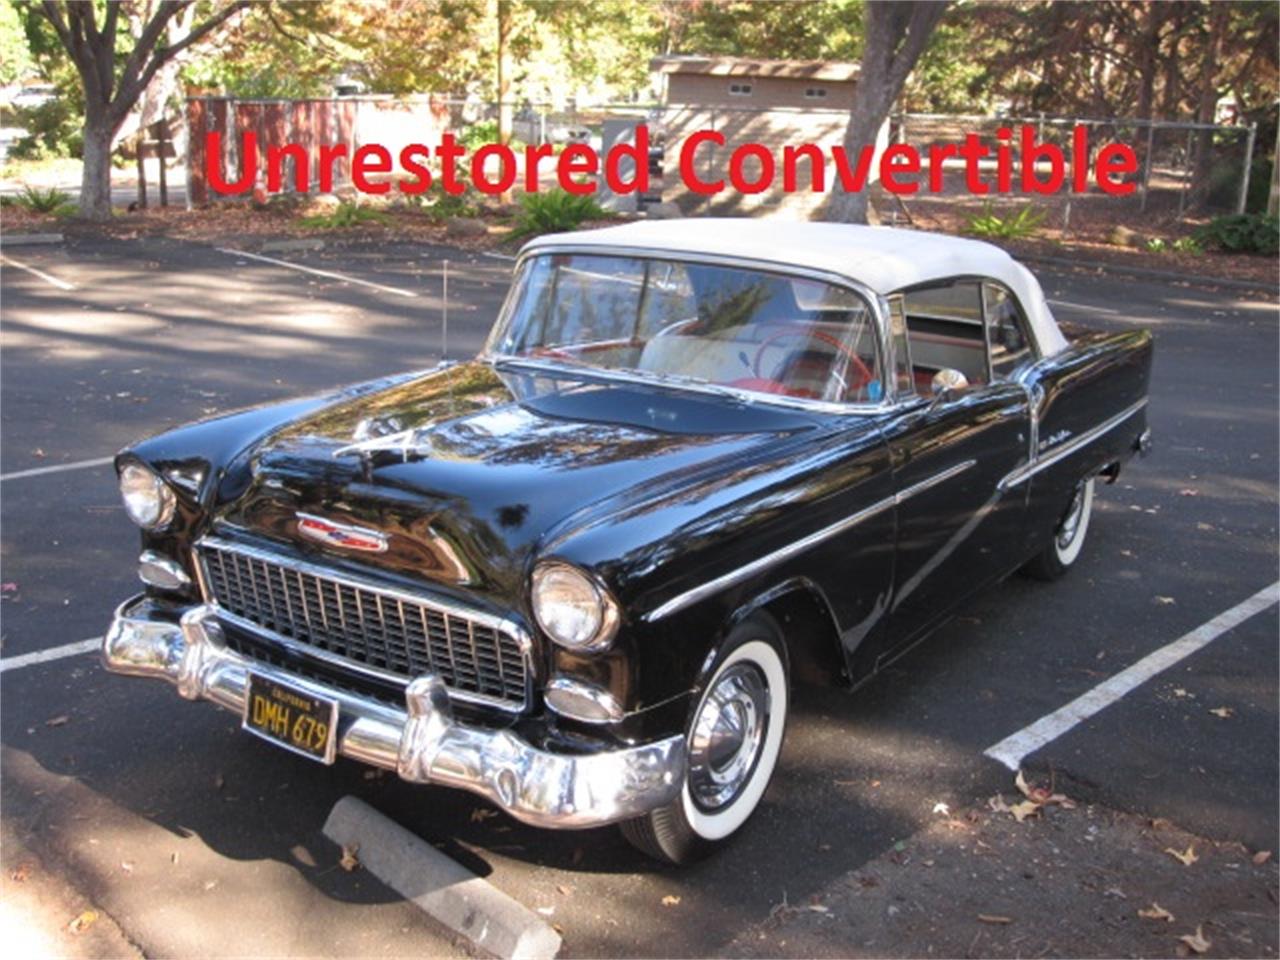 For Sale: 1955 Chevrolet Bel Air in Cupertino, California for sale in Cupertino, CA